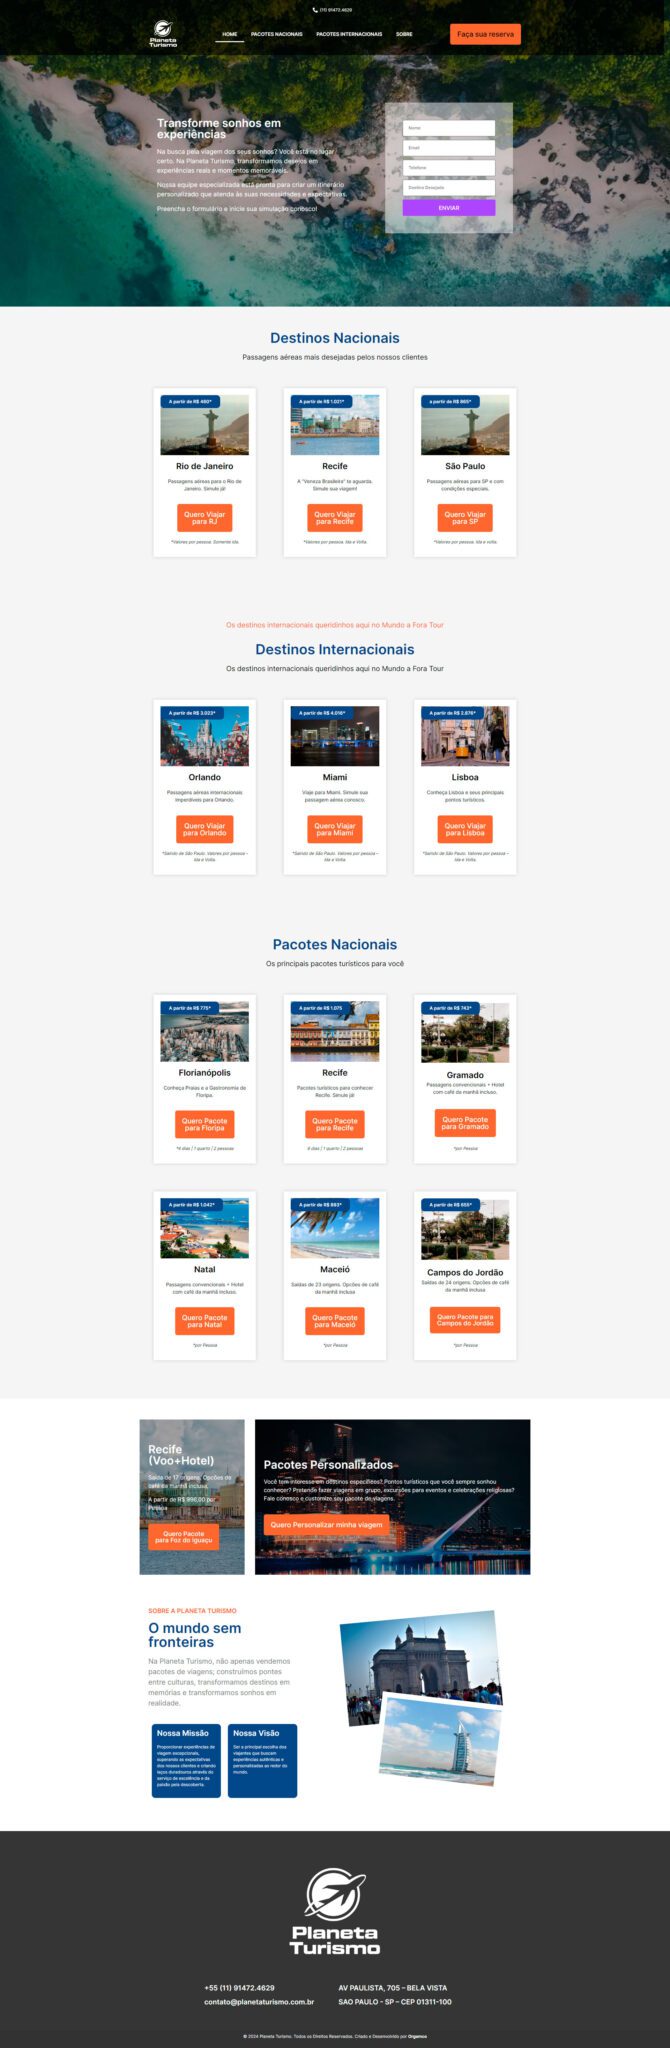 print-landing-page-planeta-turismo-portfolio-cliente-portfolio-orgamco-marketing-digtial-fortaleza